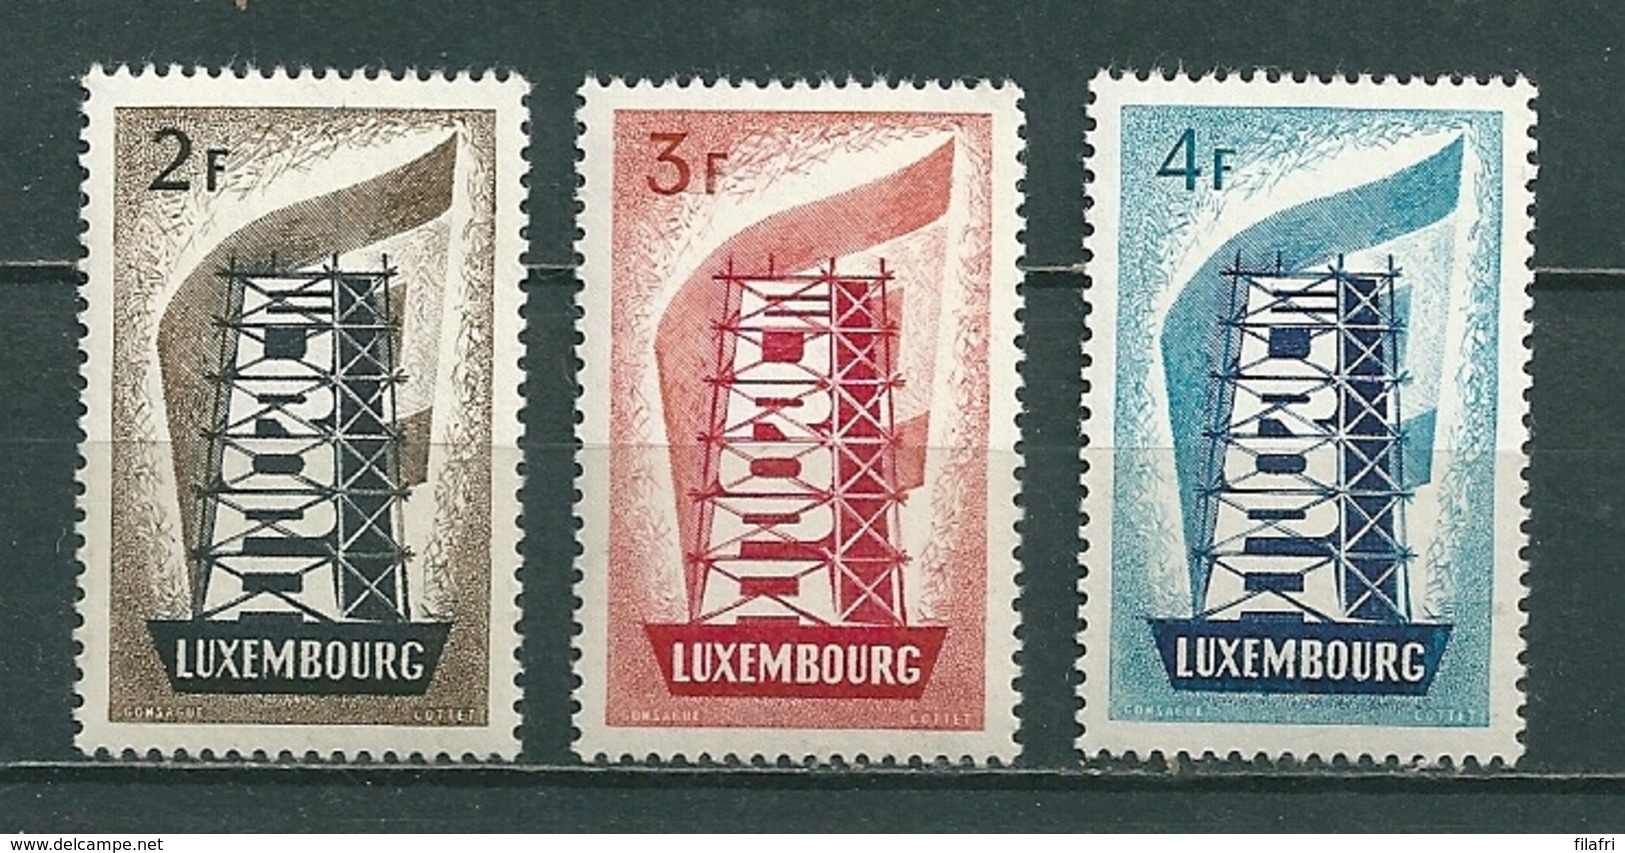 514/516 LUXEMBURG - LUXEMBOURG XX Postfris - 1956